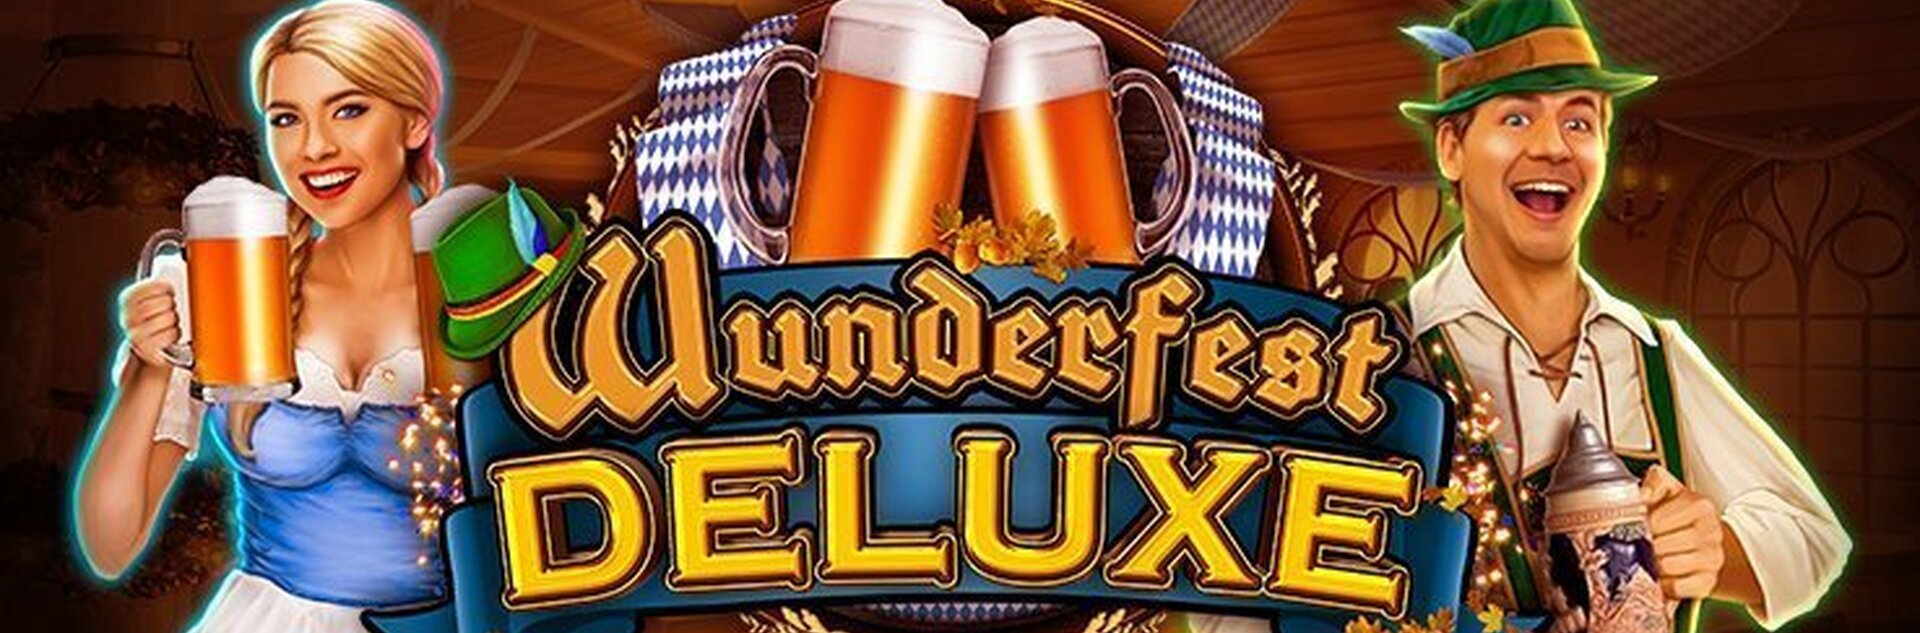 Play Wunderfest Deluxe Free Slot